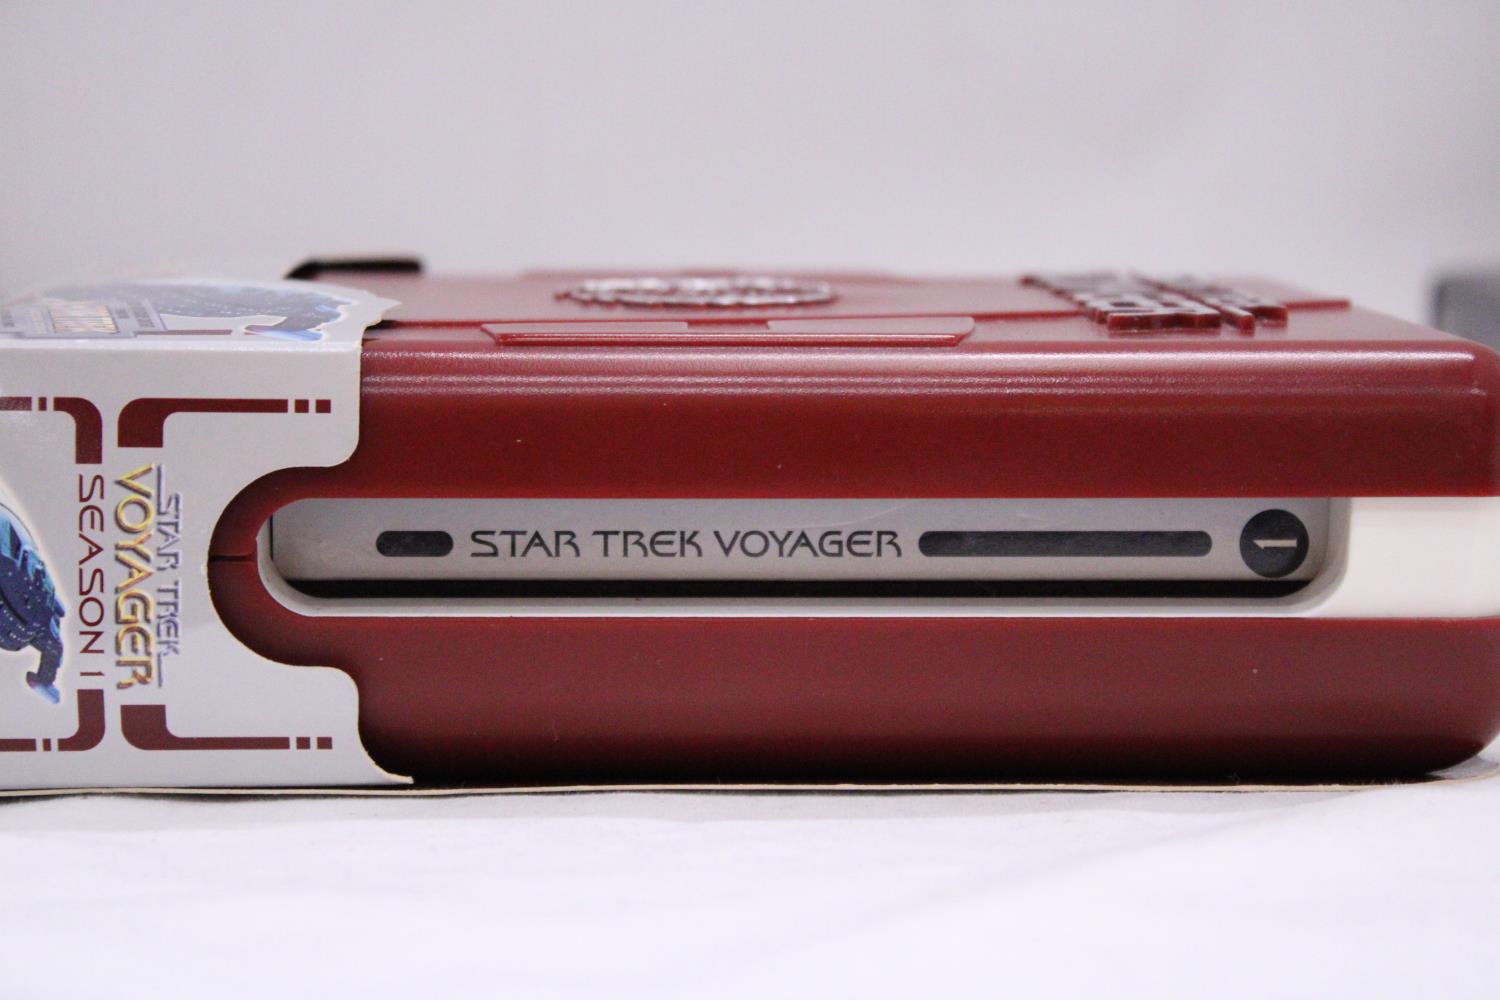 A LARGE STAR TREK ENCYCLOPEDIA AND SPECIAL PACK, SEASON 1, STAR TREK, VOYAGER DVD - Image 4 of 5